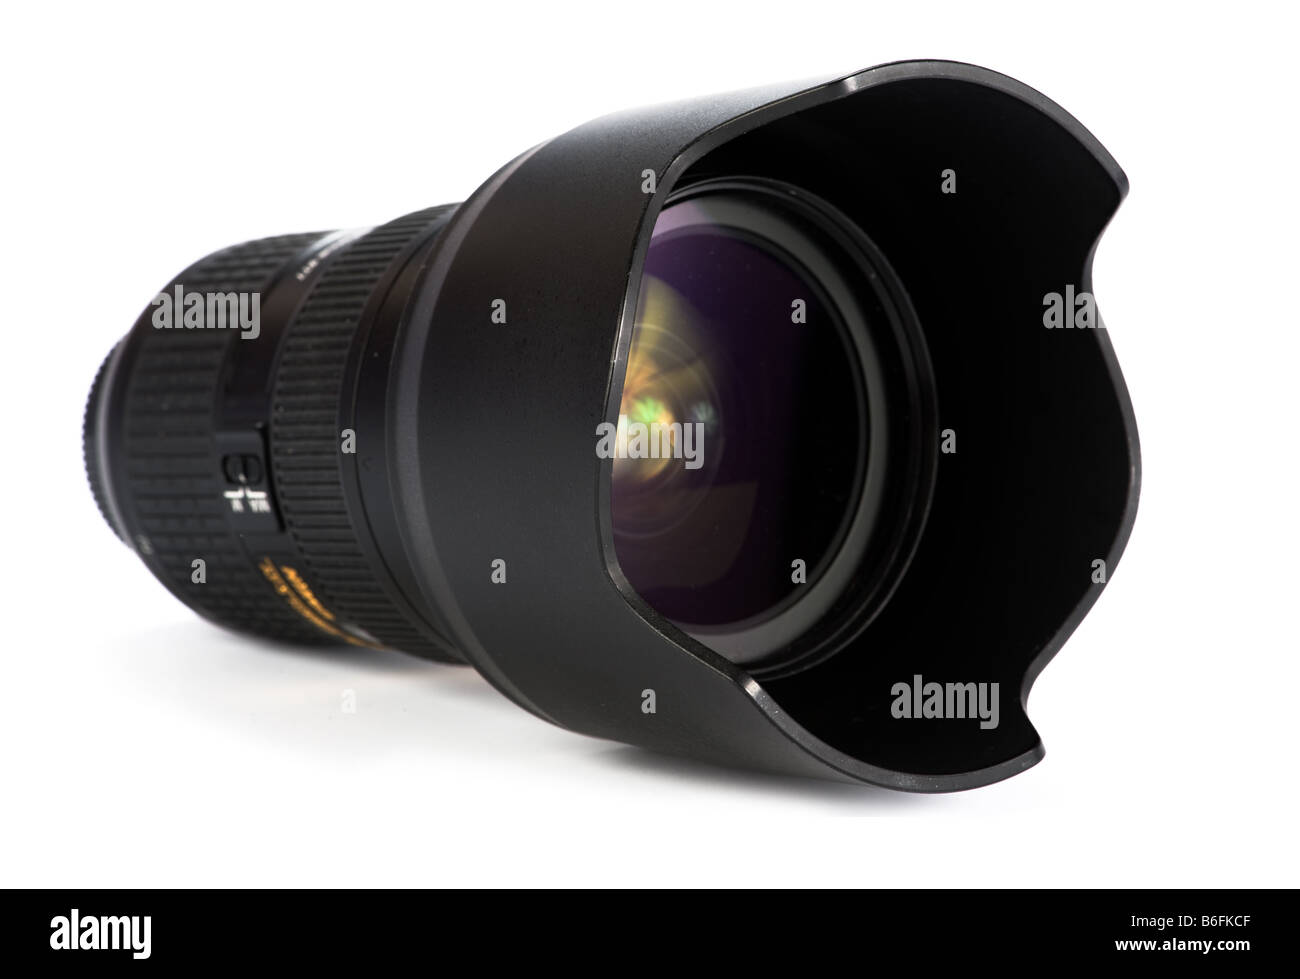 Si tratta di un 24 70 mm obiettivo zoom di qualità premium per una fotocamera reflex digitale Foto Stock